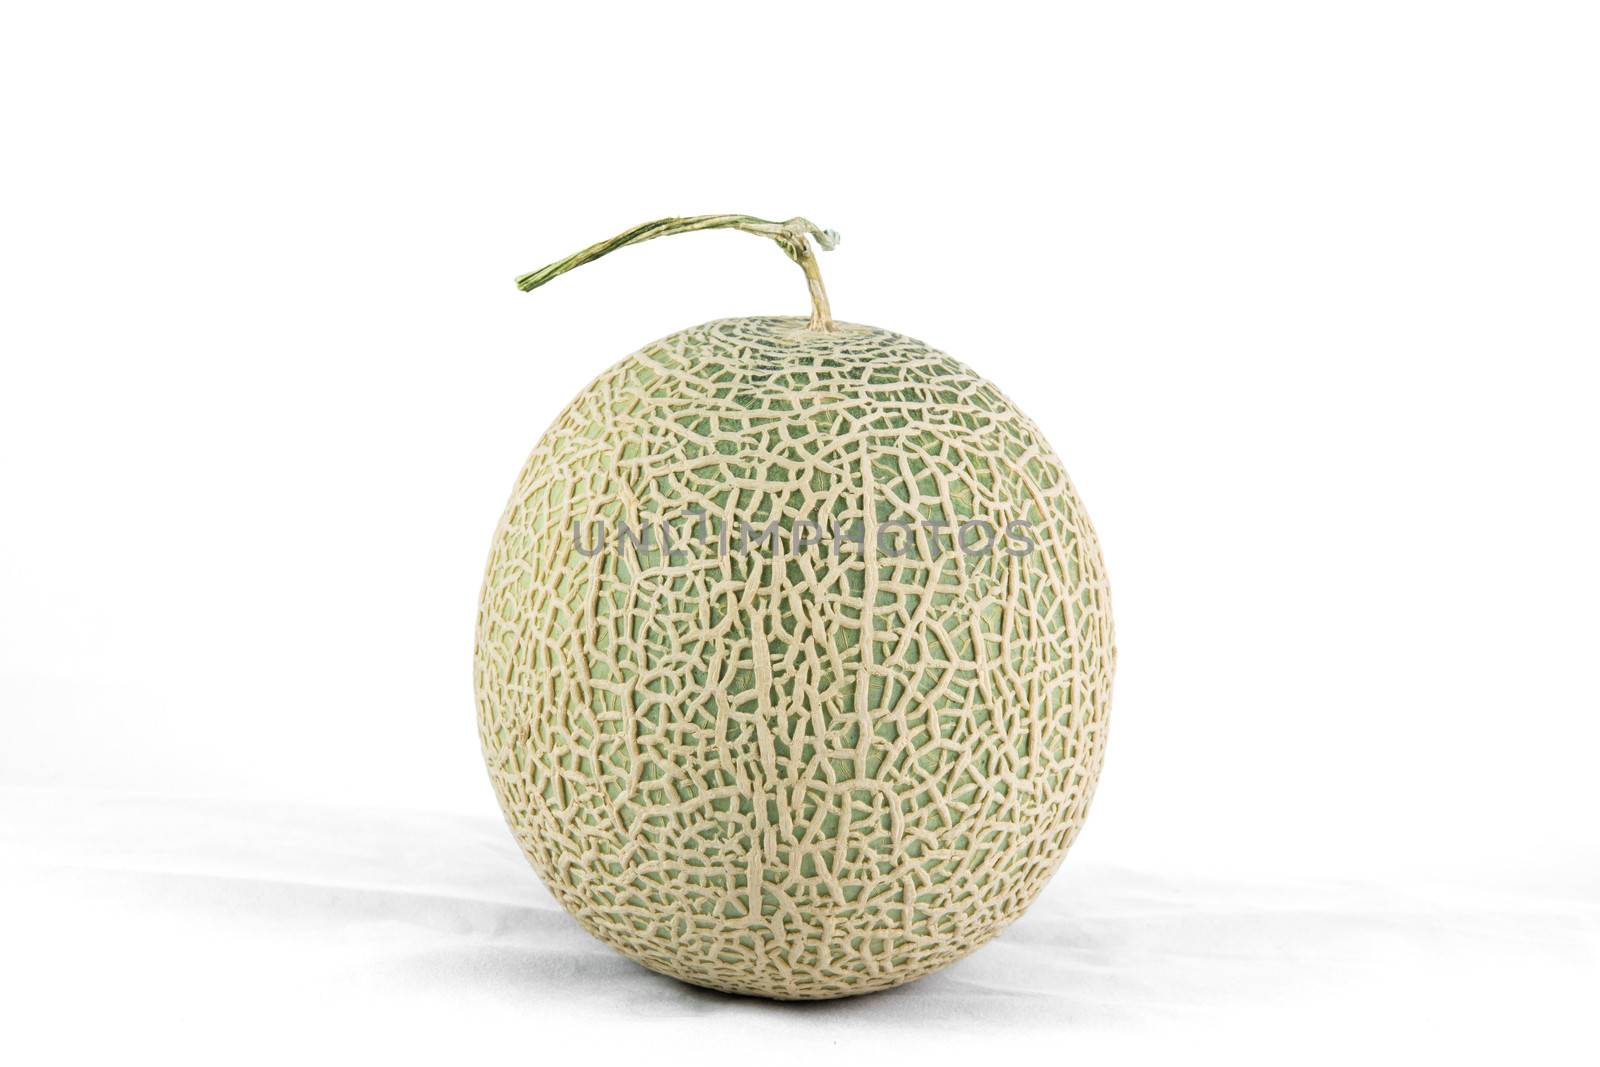 cantaloupe melon isolate by Sorapop